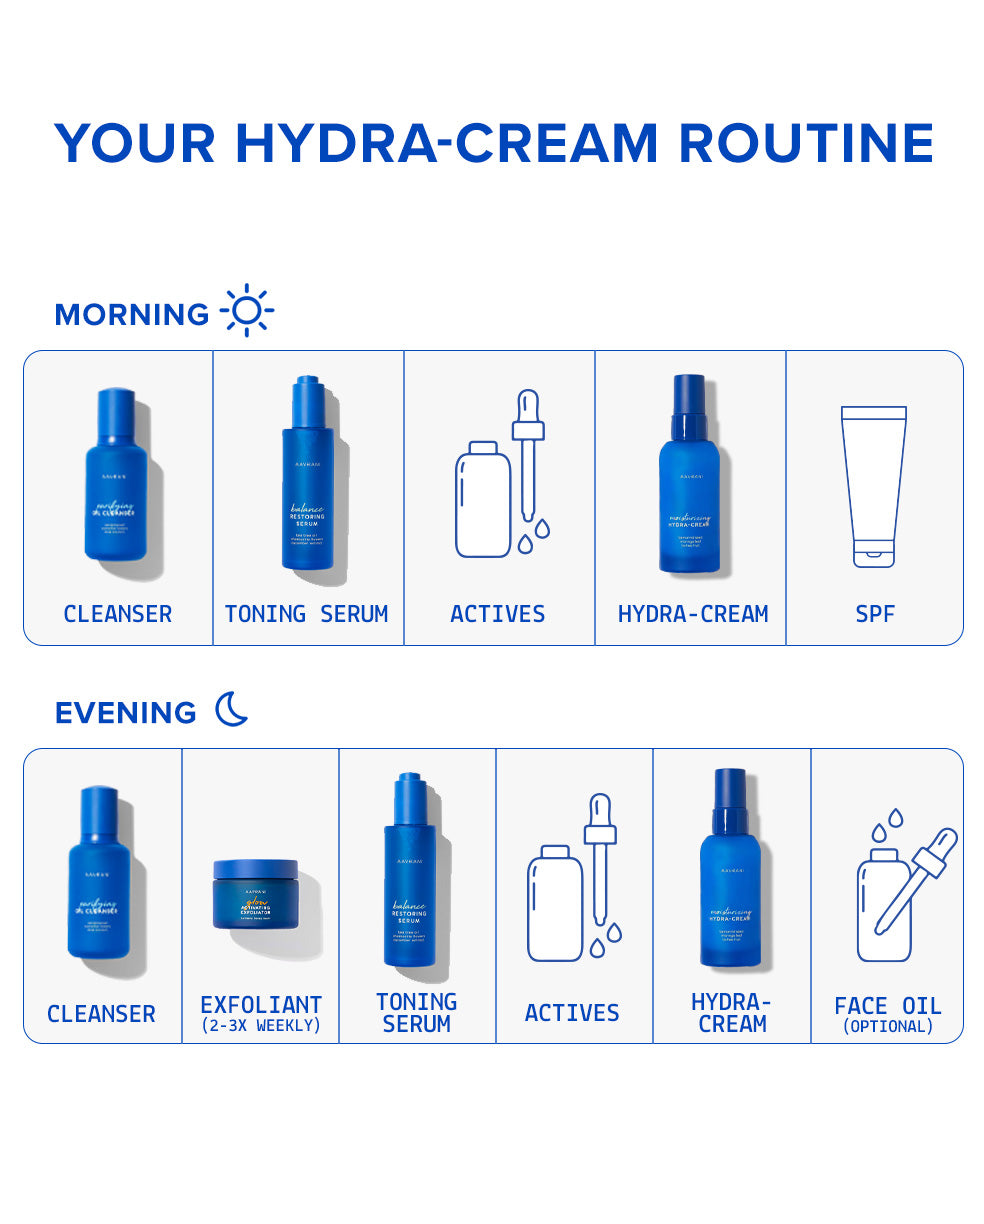 AAVRANI Moisturizing Hydra-Cream Skin Care Routine. Morning: Cleanser, Toning Serum, Actives, Hydra-Cream, SPF. Evening: Cleanser, Exfoliant (2-3X Weekly), Toning Serum, Actives, Hydra-Cream, Face Oil (Optional)